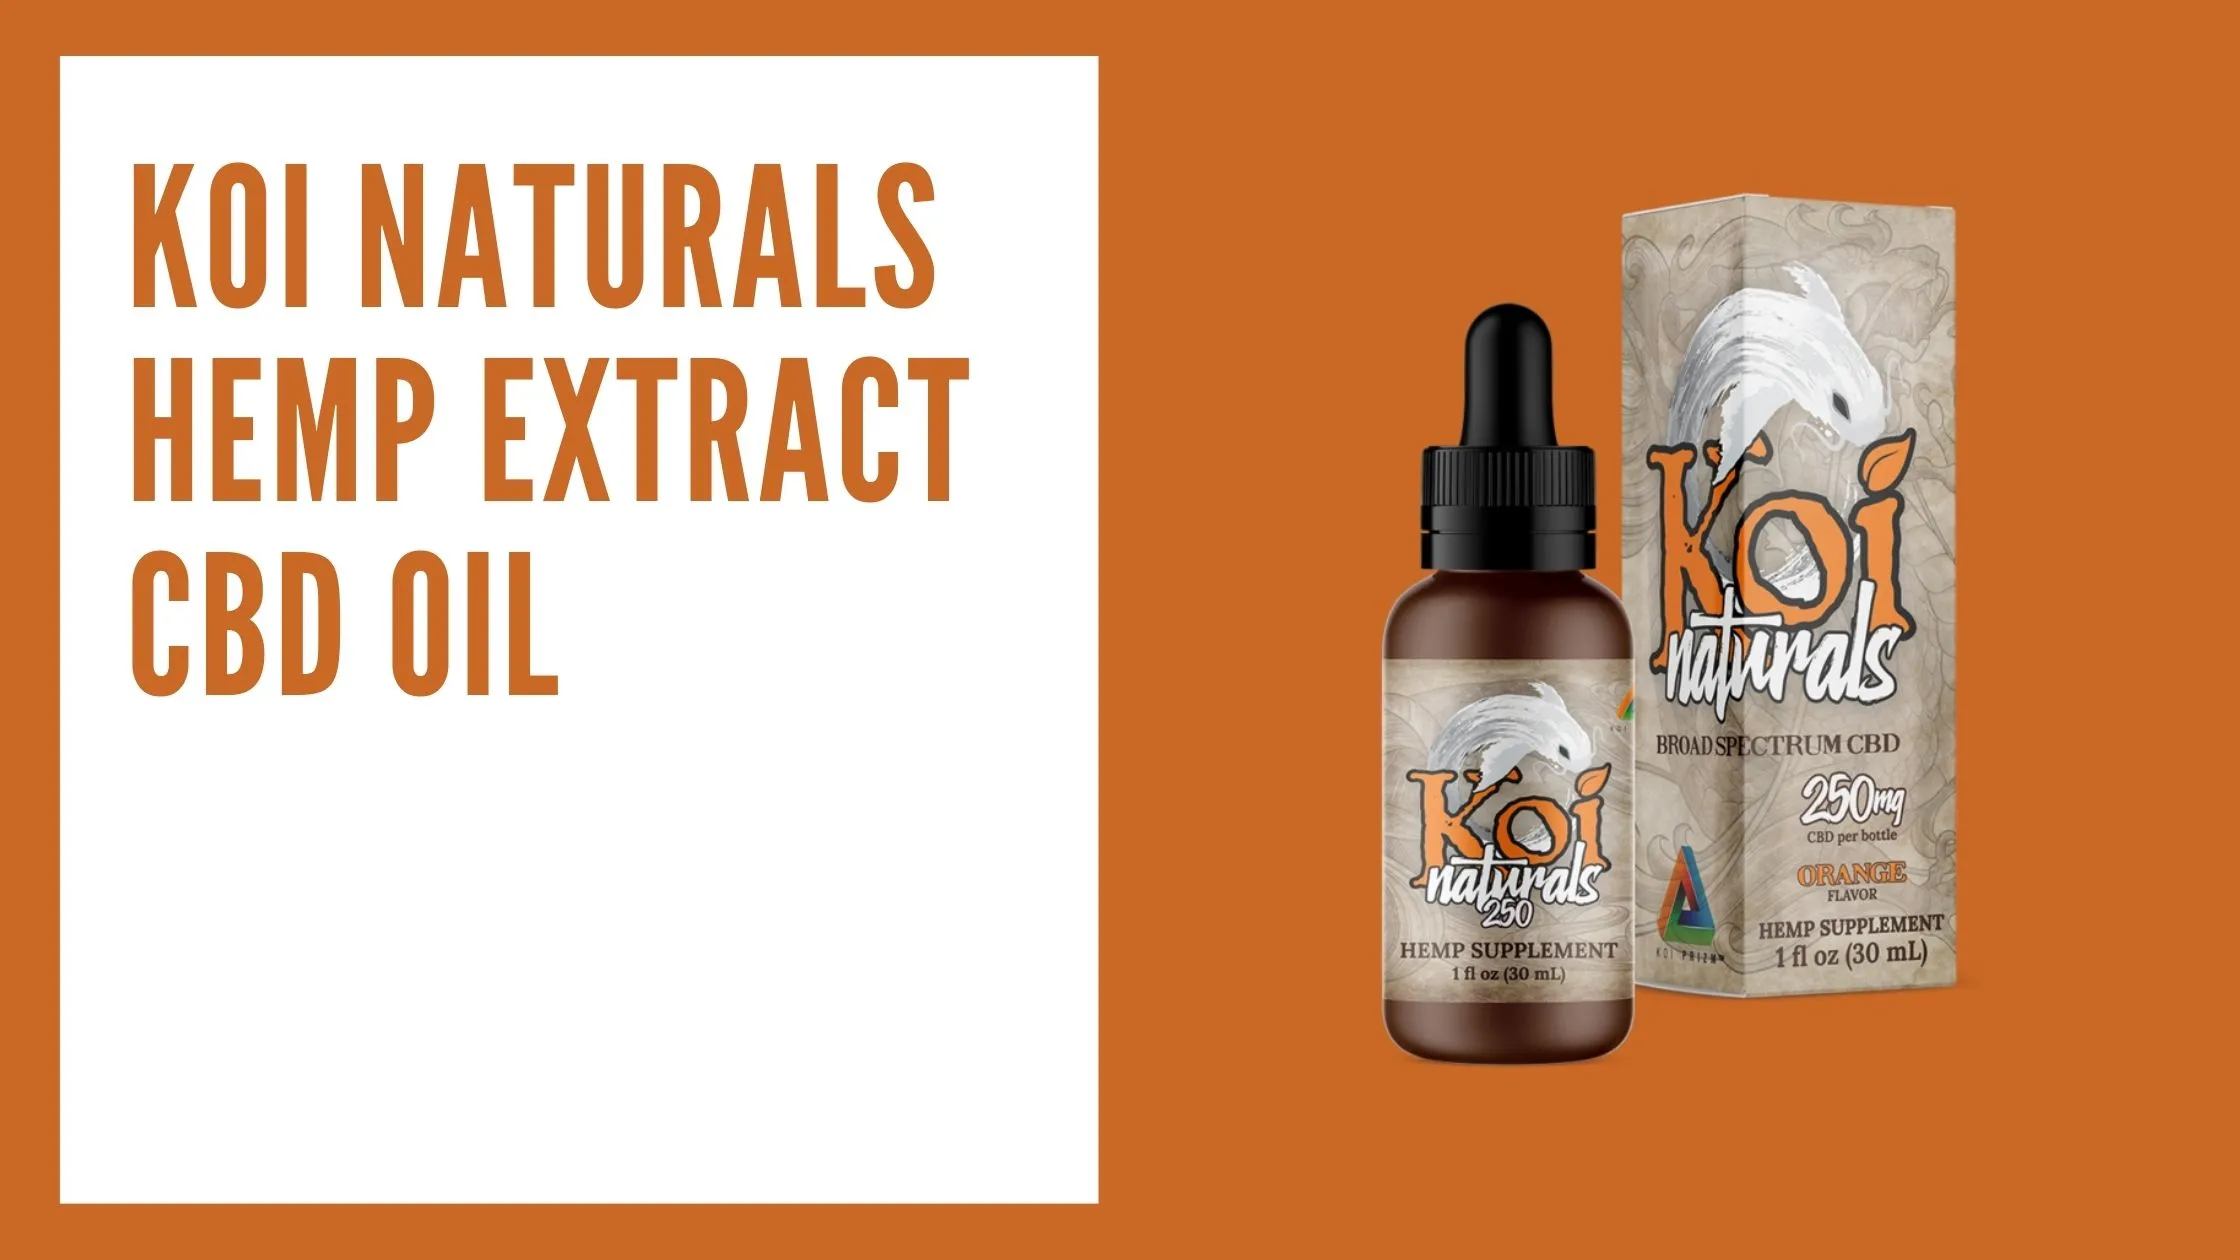 koi naturals hemp extract cbd oil